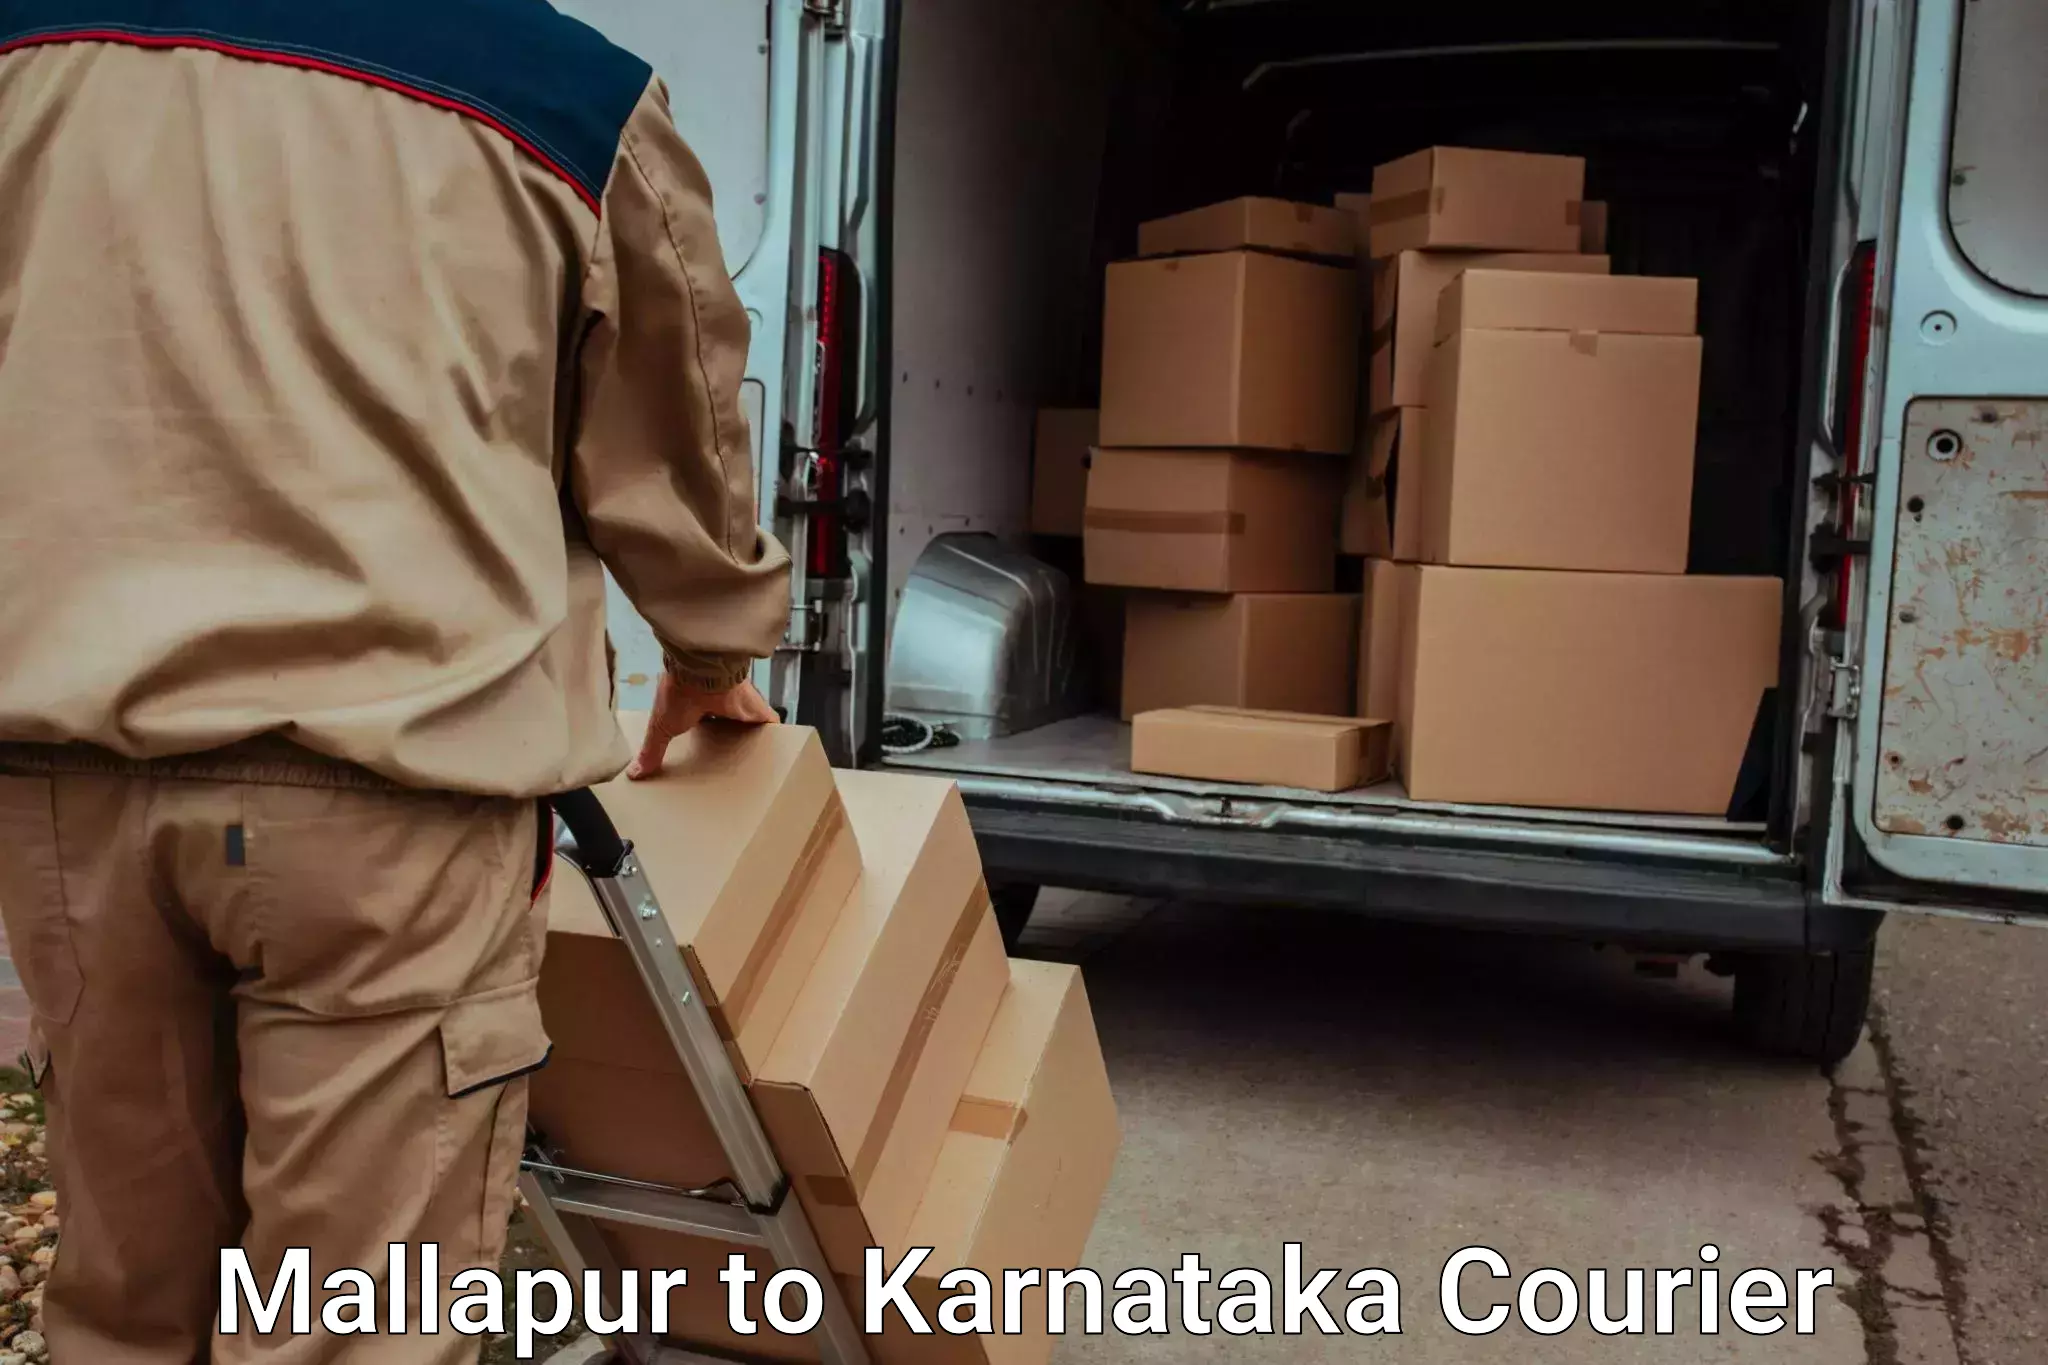 Trusted relocation experts Mallapur to Channarayapatna